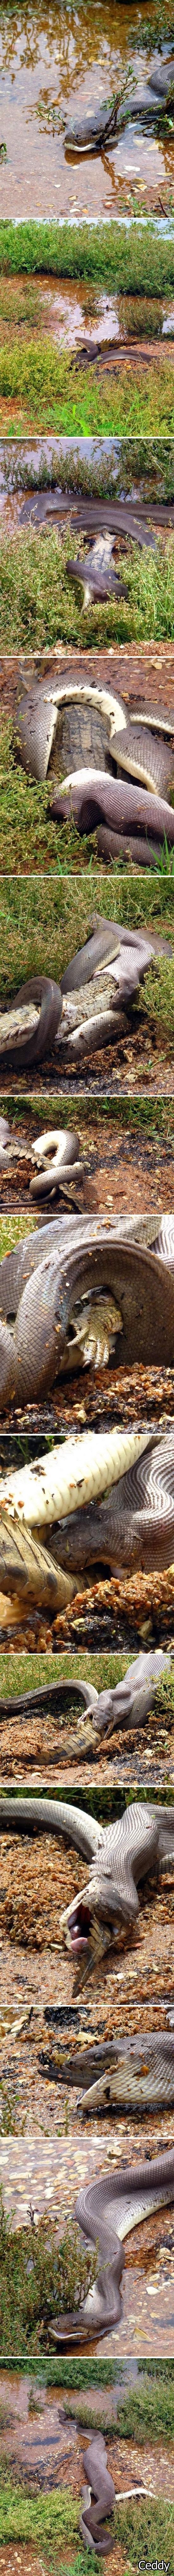 Python devours croc